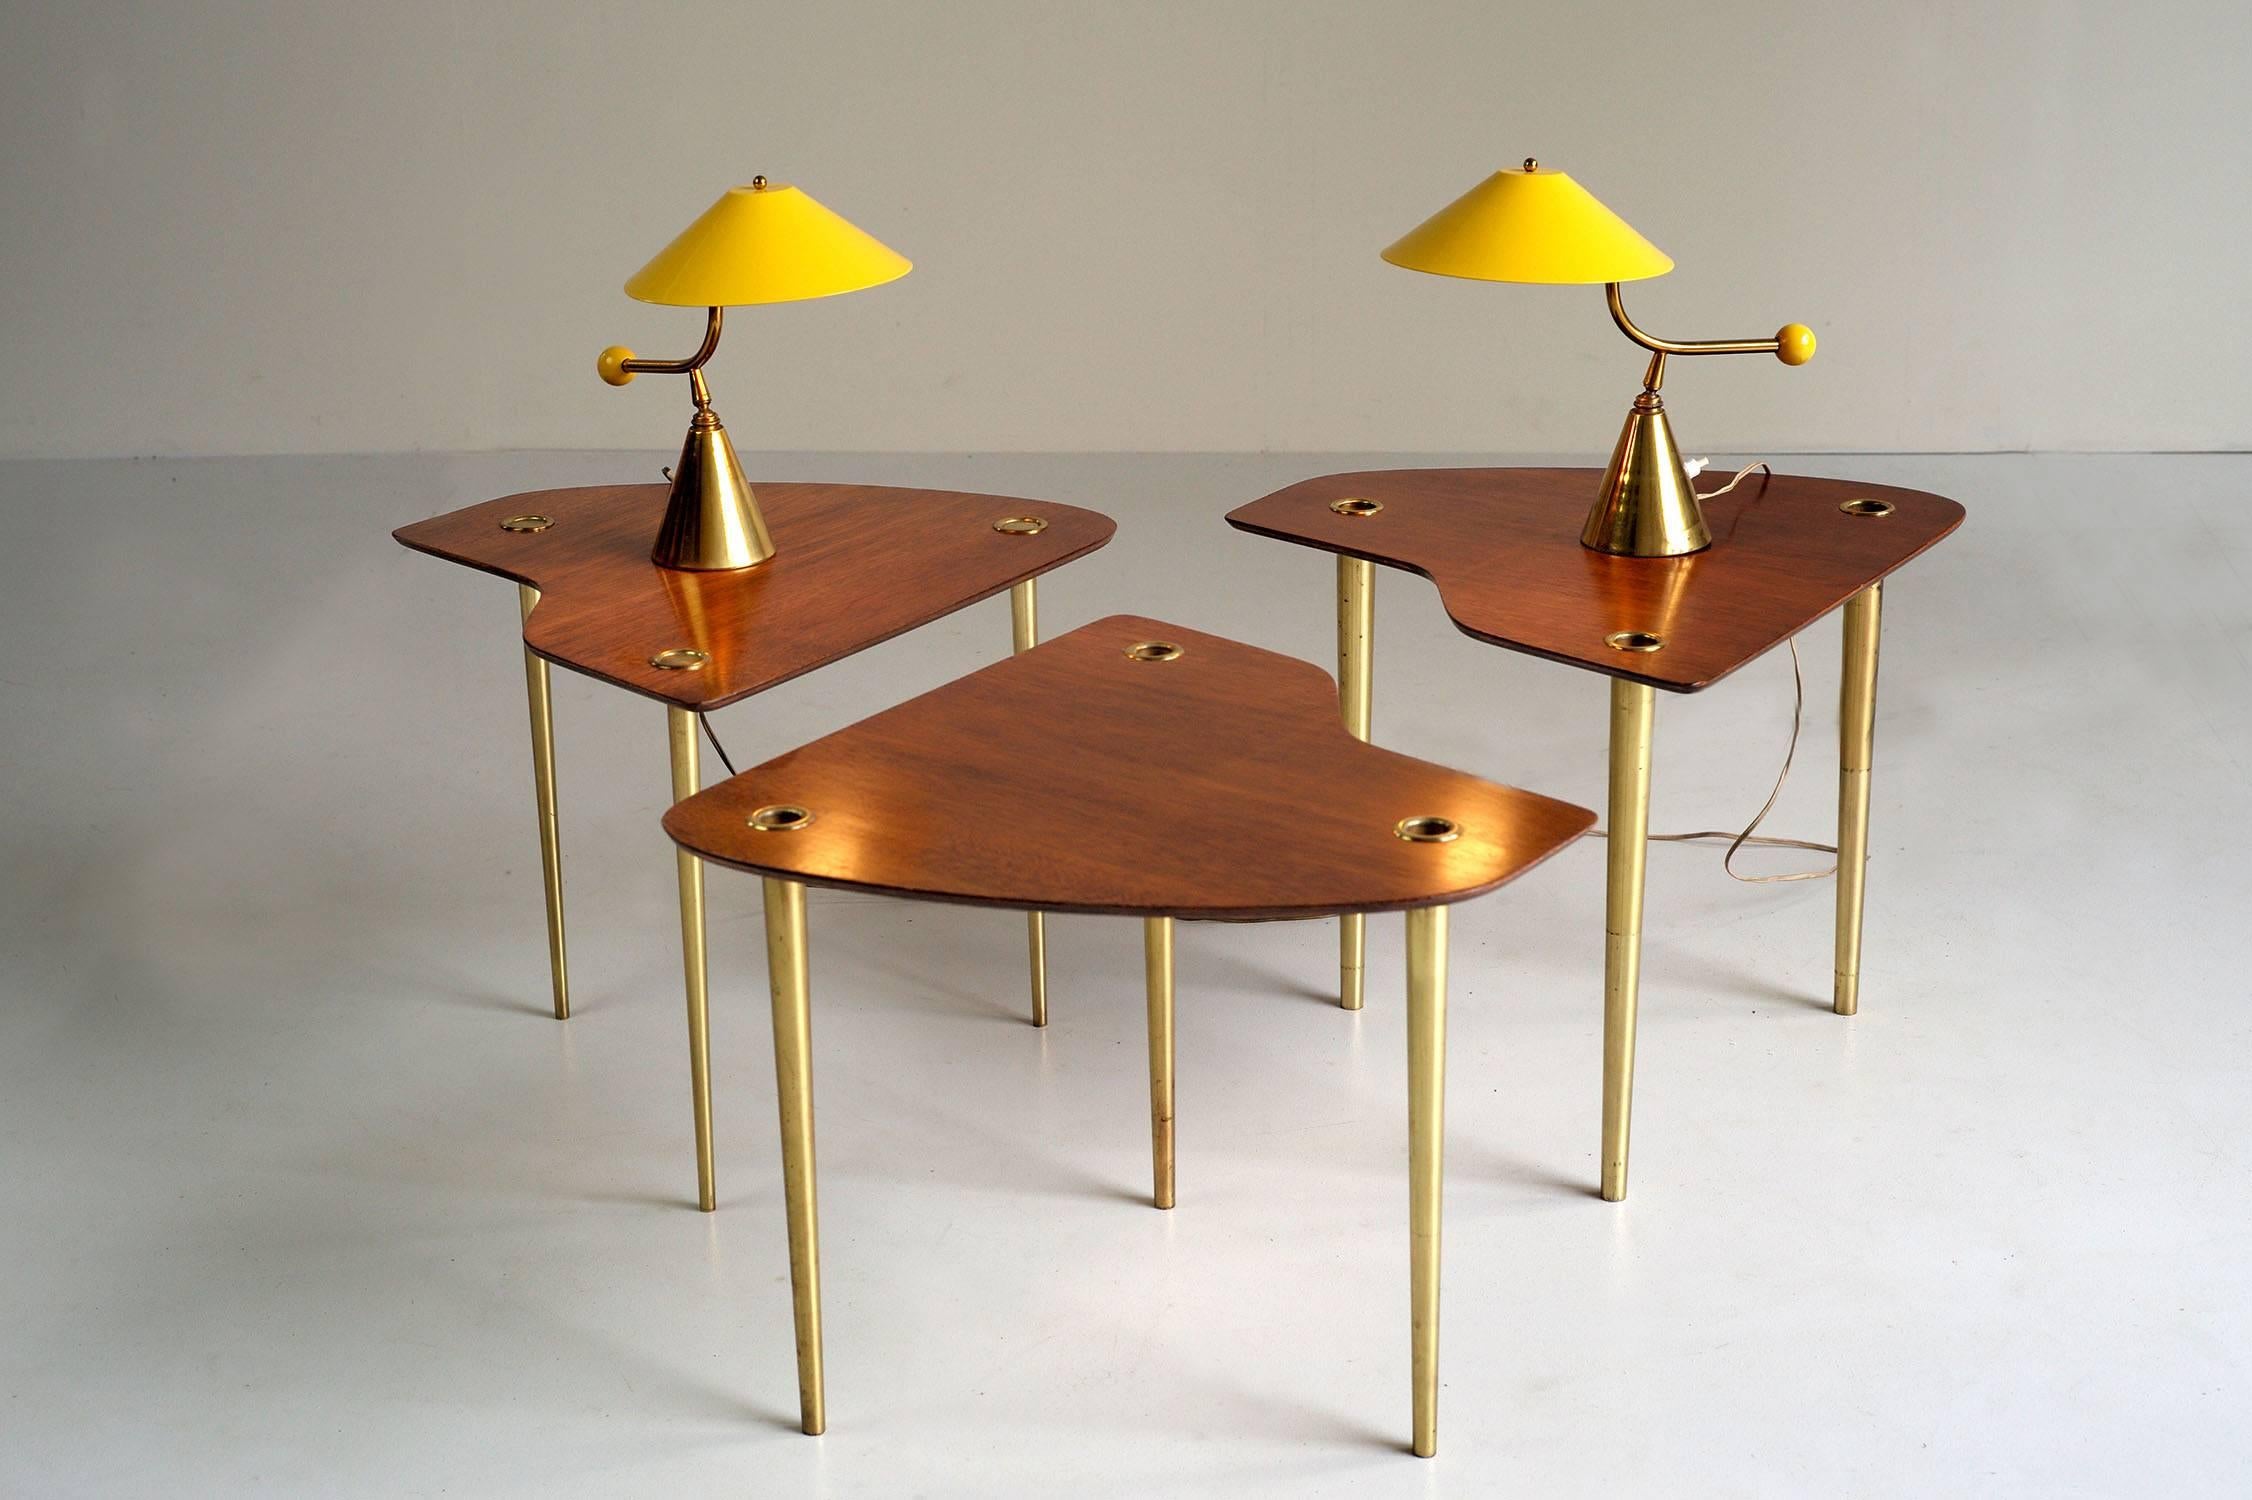 Pierre Cruege, Set of Three Free-Form Tables 